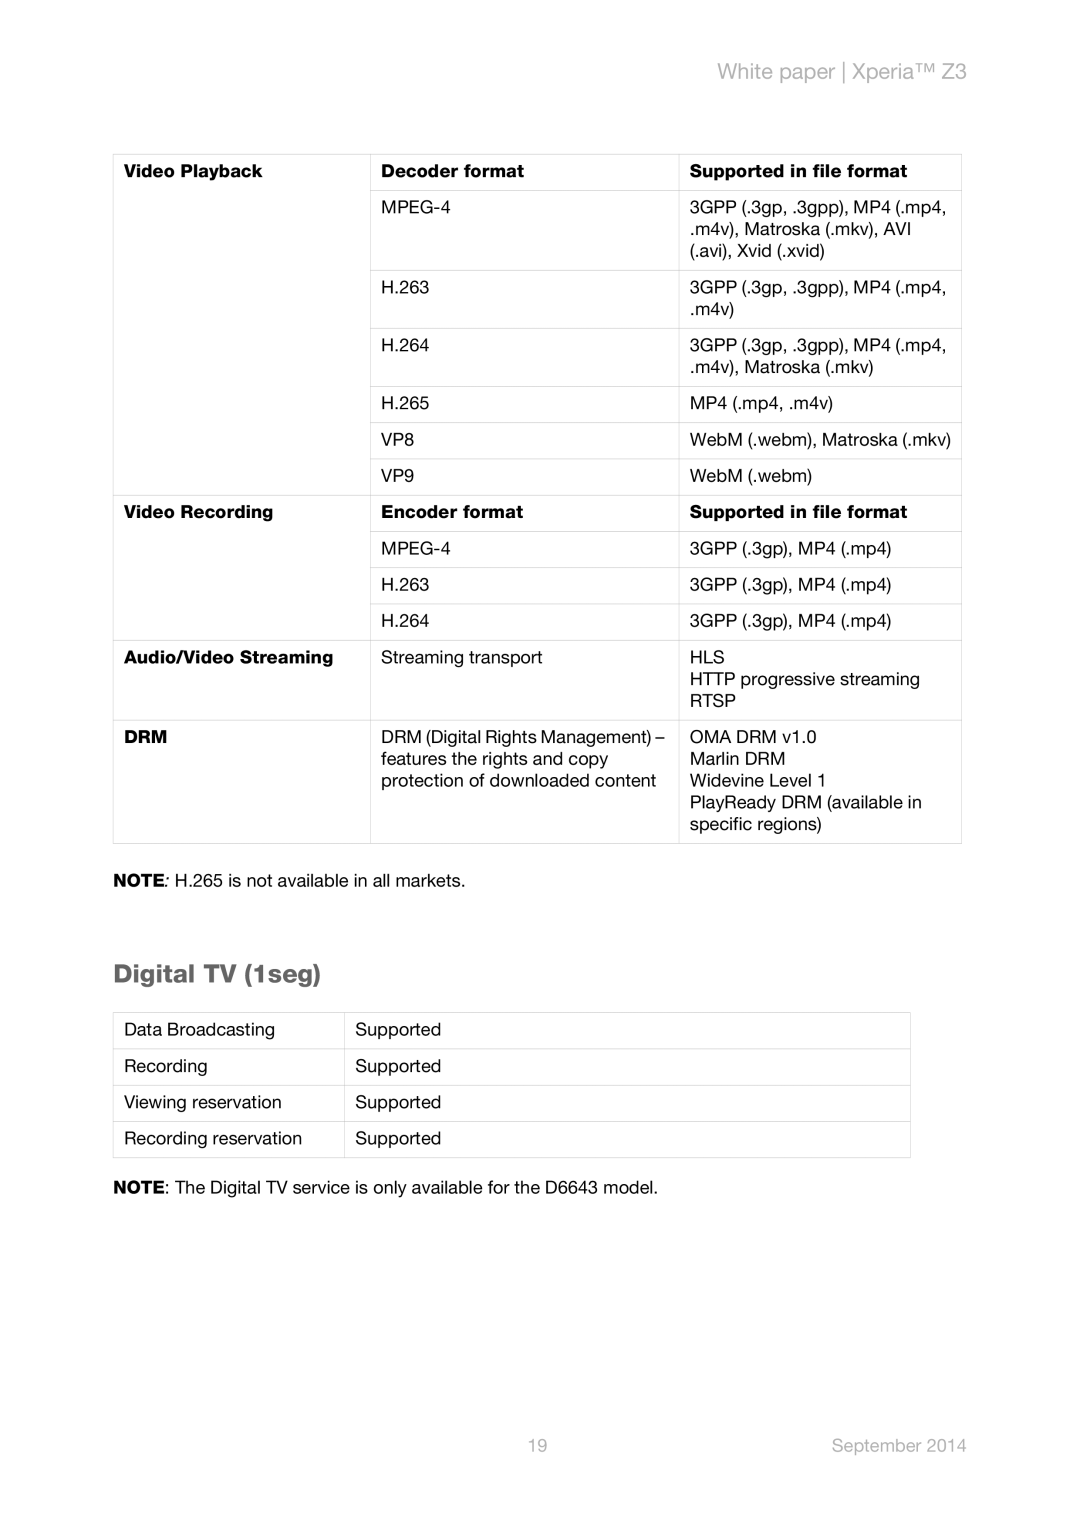 Sony D6633, D6653, D6616, D6603, D6643 manual Digital TV 1seg, White paper Xperia Z3, September 